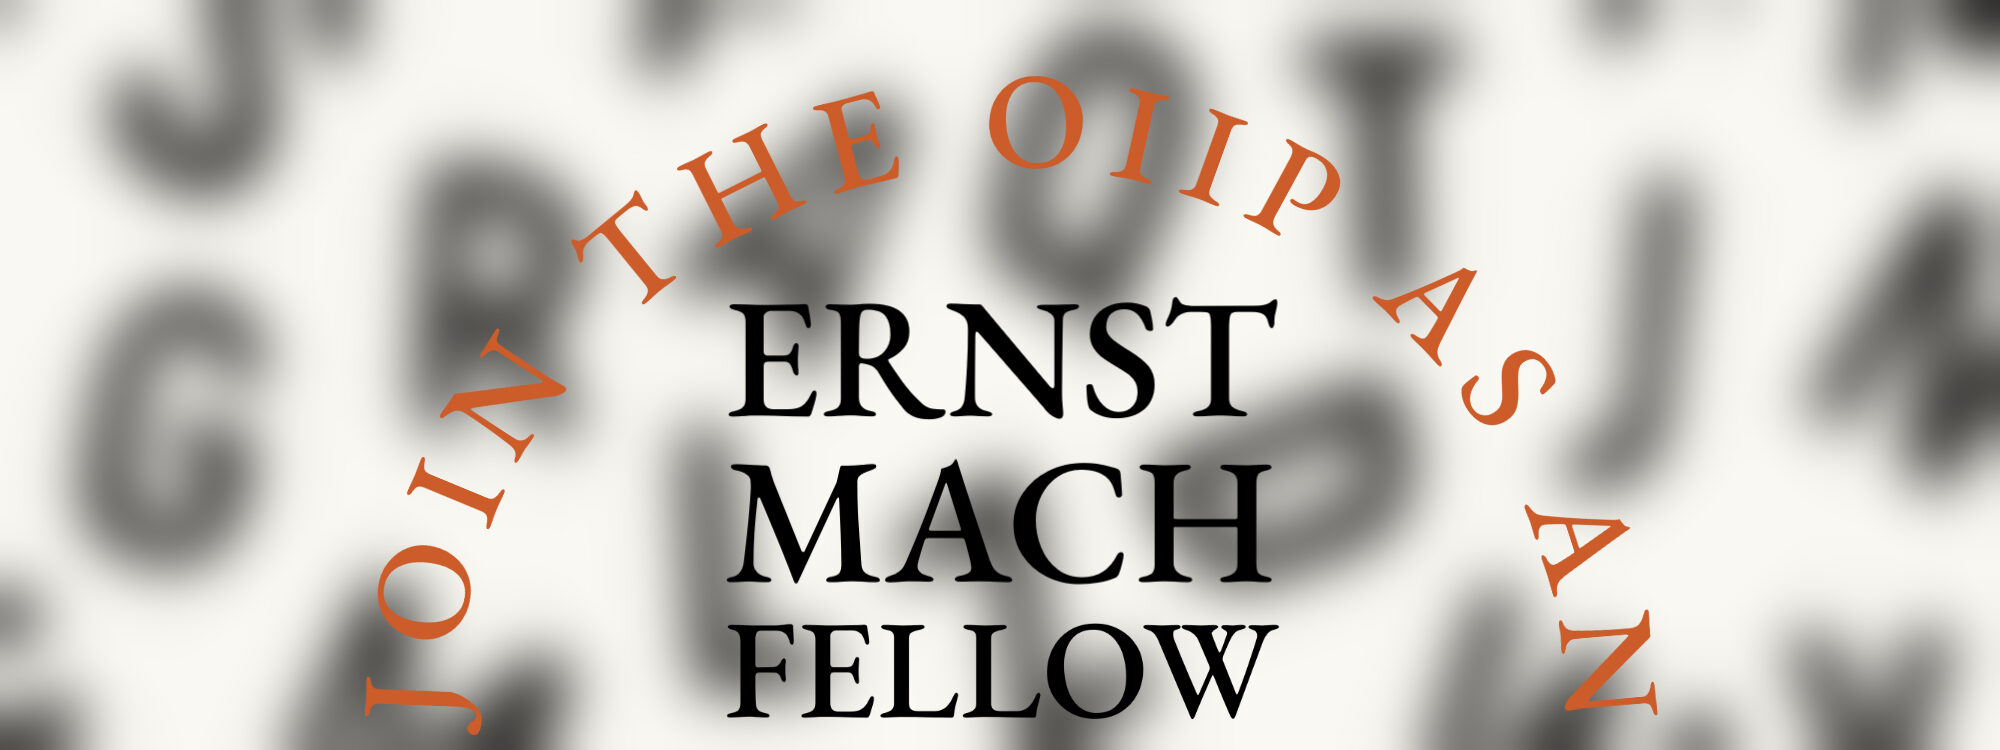 Join the oiip as an Ernst Mach Fellow